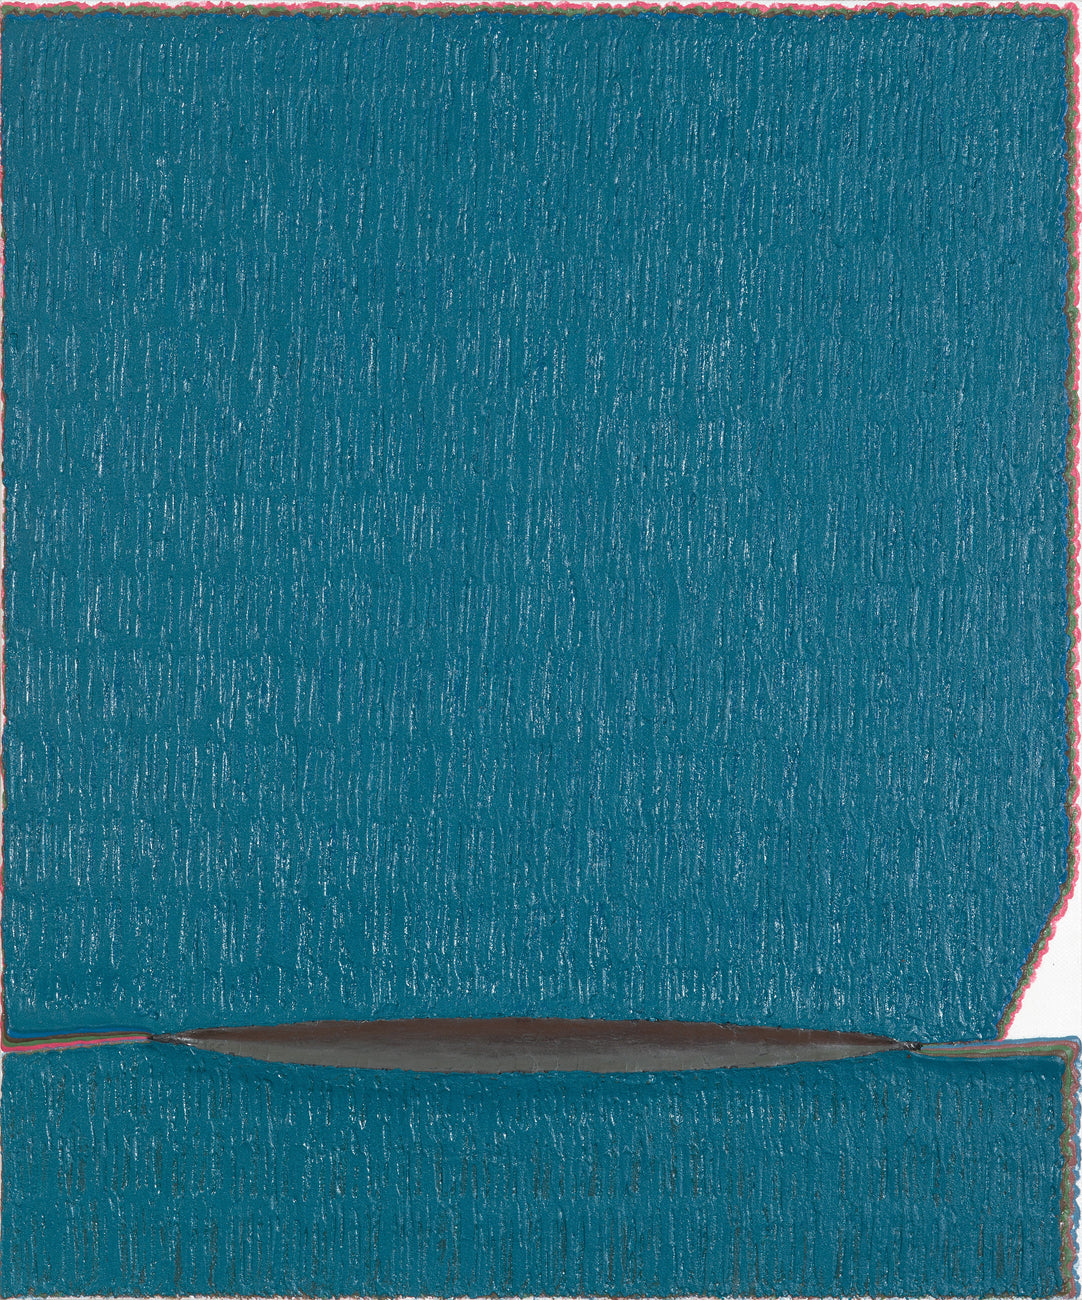 Pile up & Rub - Interstice (9-04), SOONIK KWON, 2022Mixed media on canvas, panel60.6 × 50.0 cm